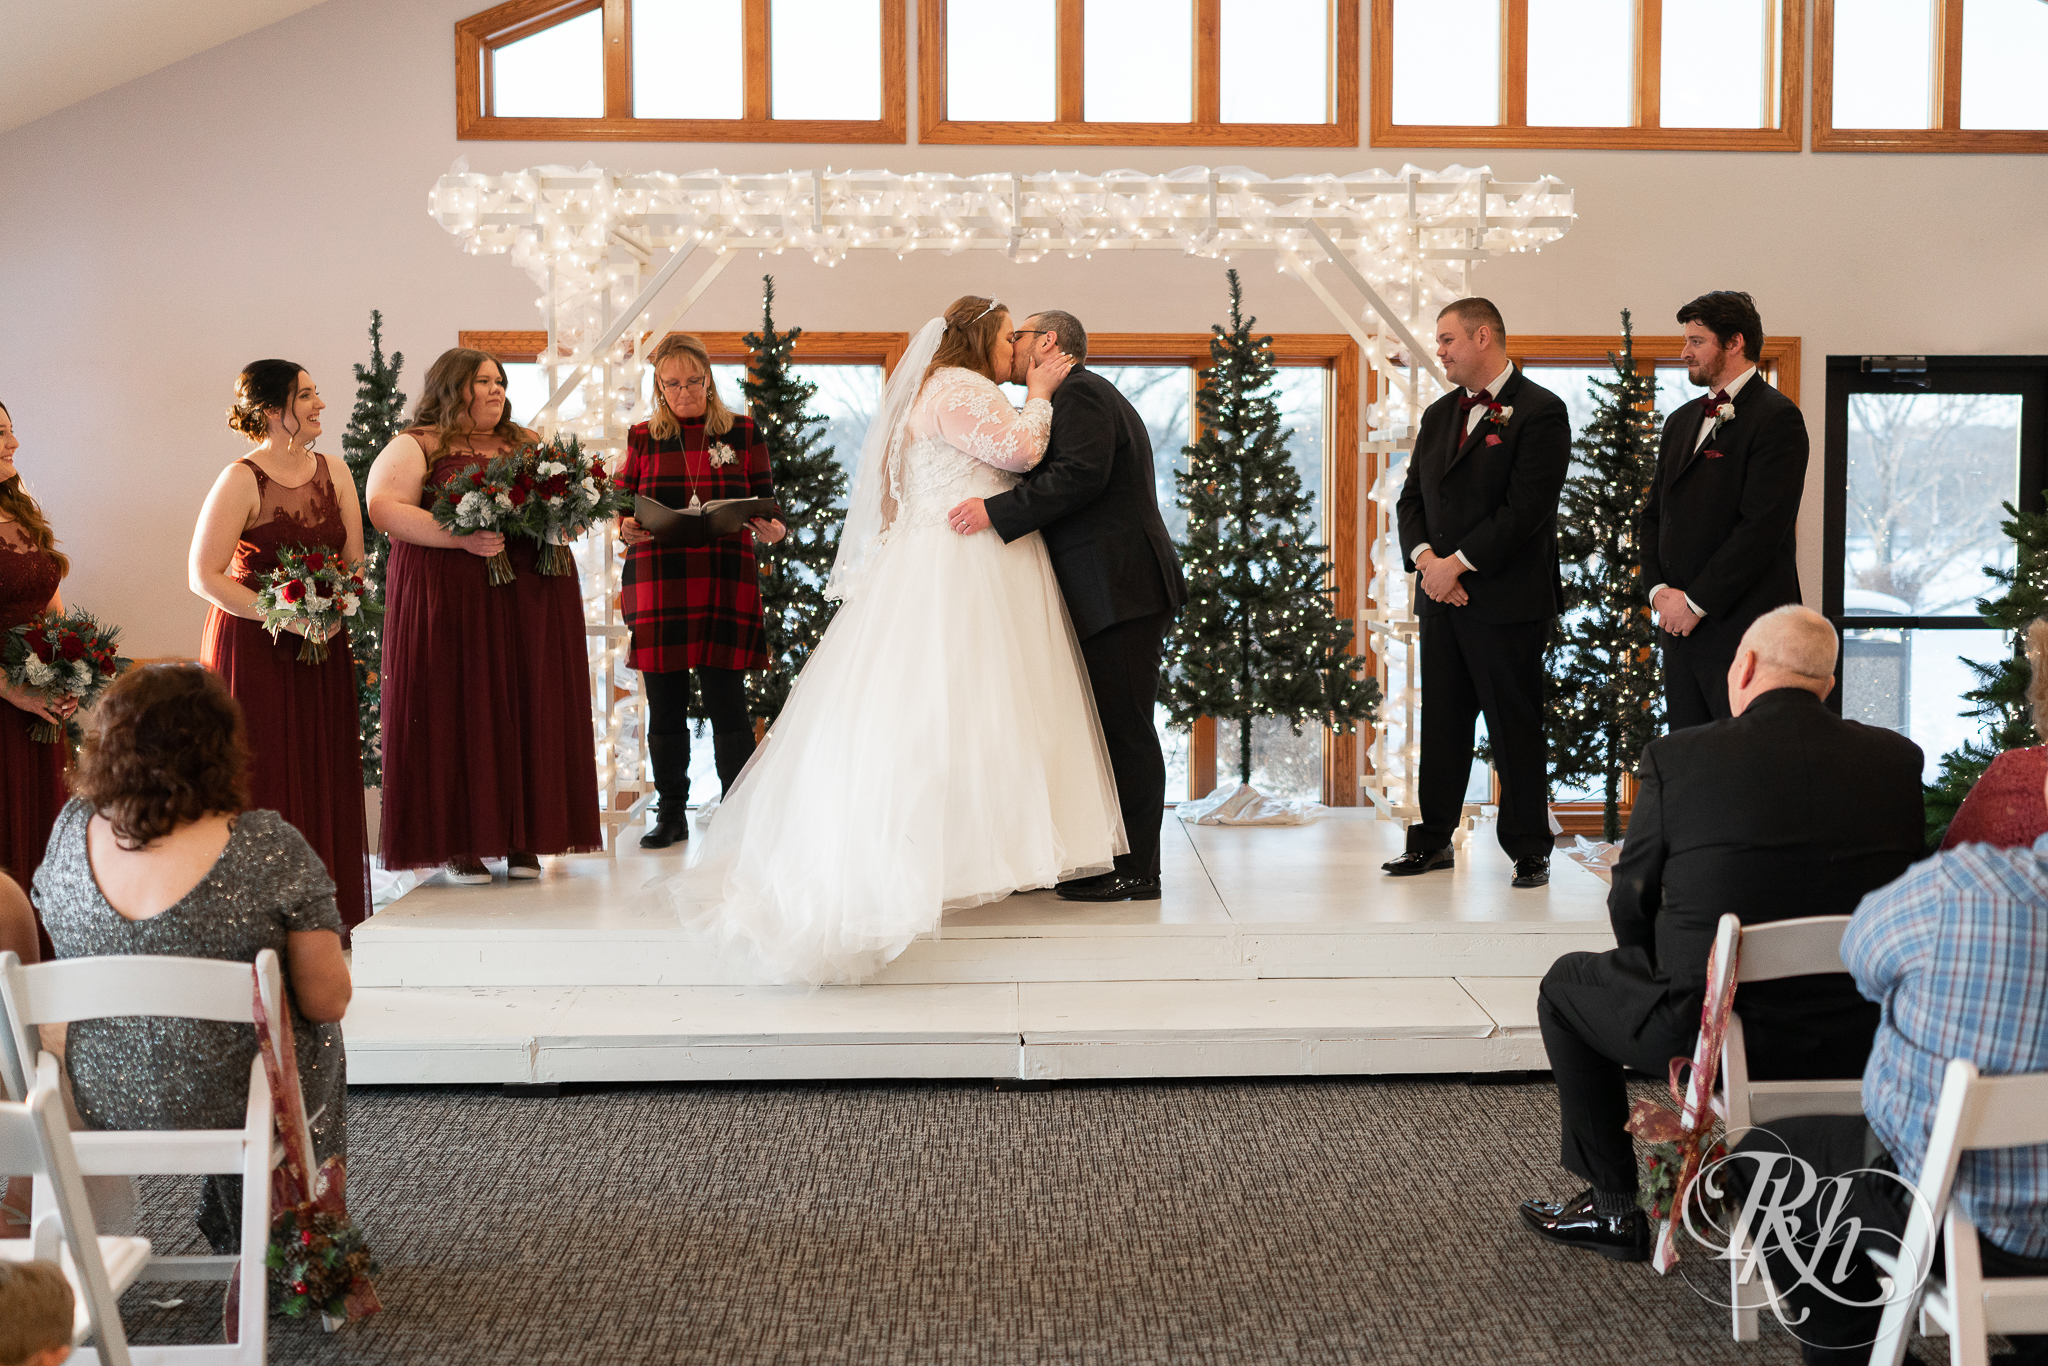 Wedding ceremony first kiss at Christmas wedding at Oak Glen Golf Course in Stillwater, Minnesota.